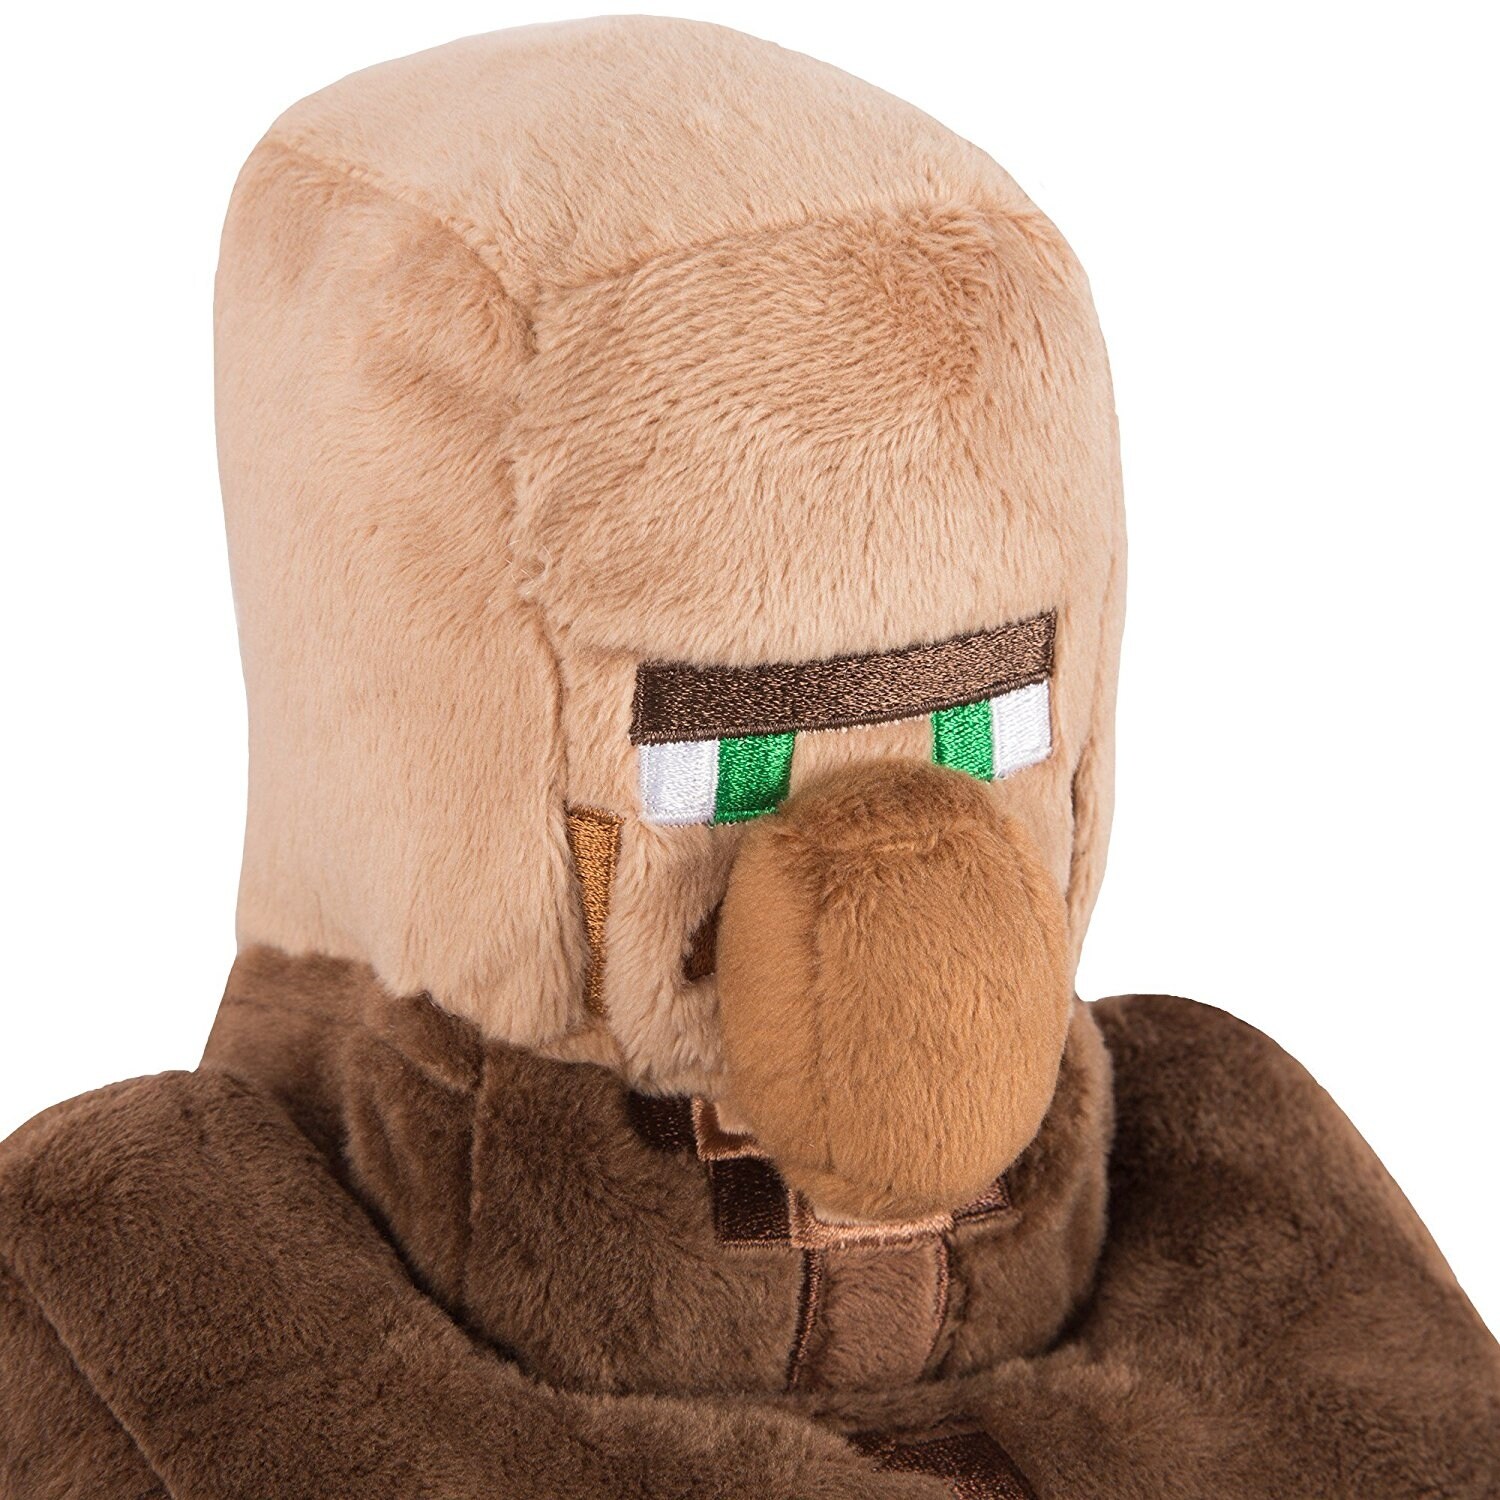 minecraft villager stuffed animal